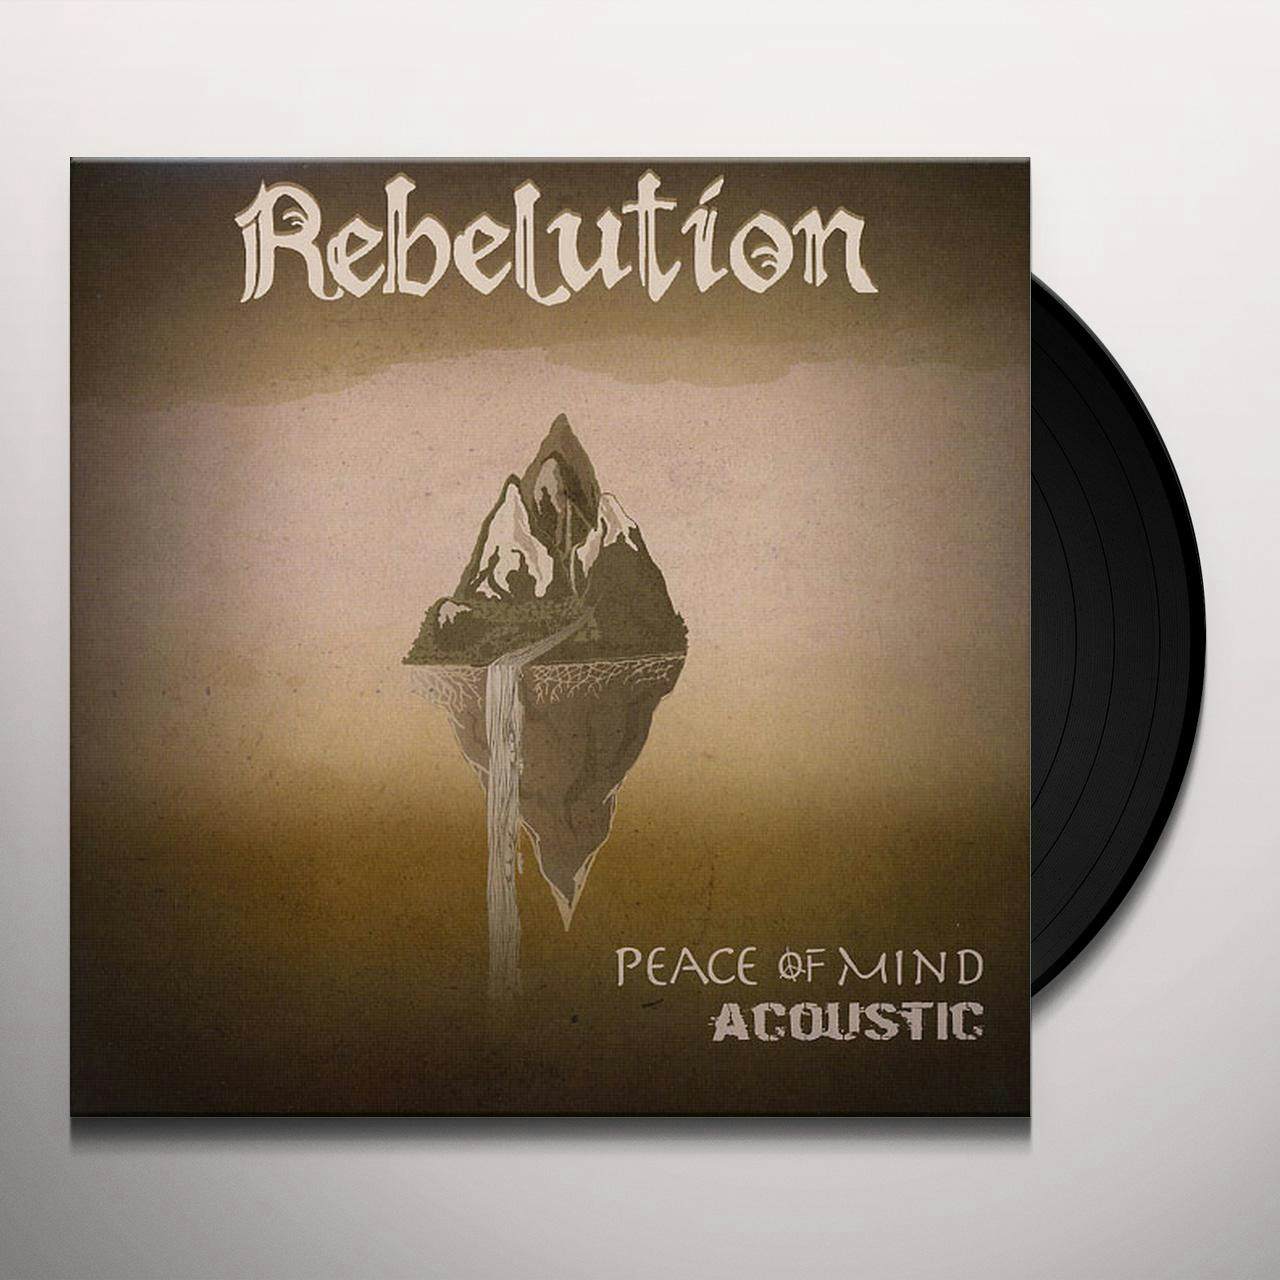 rebelution album cover